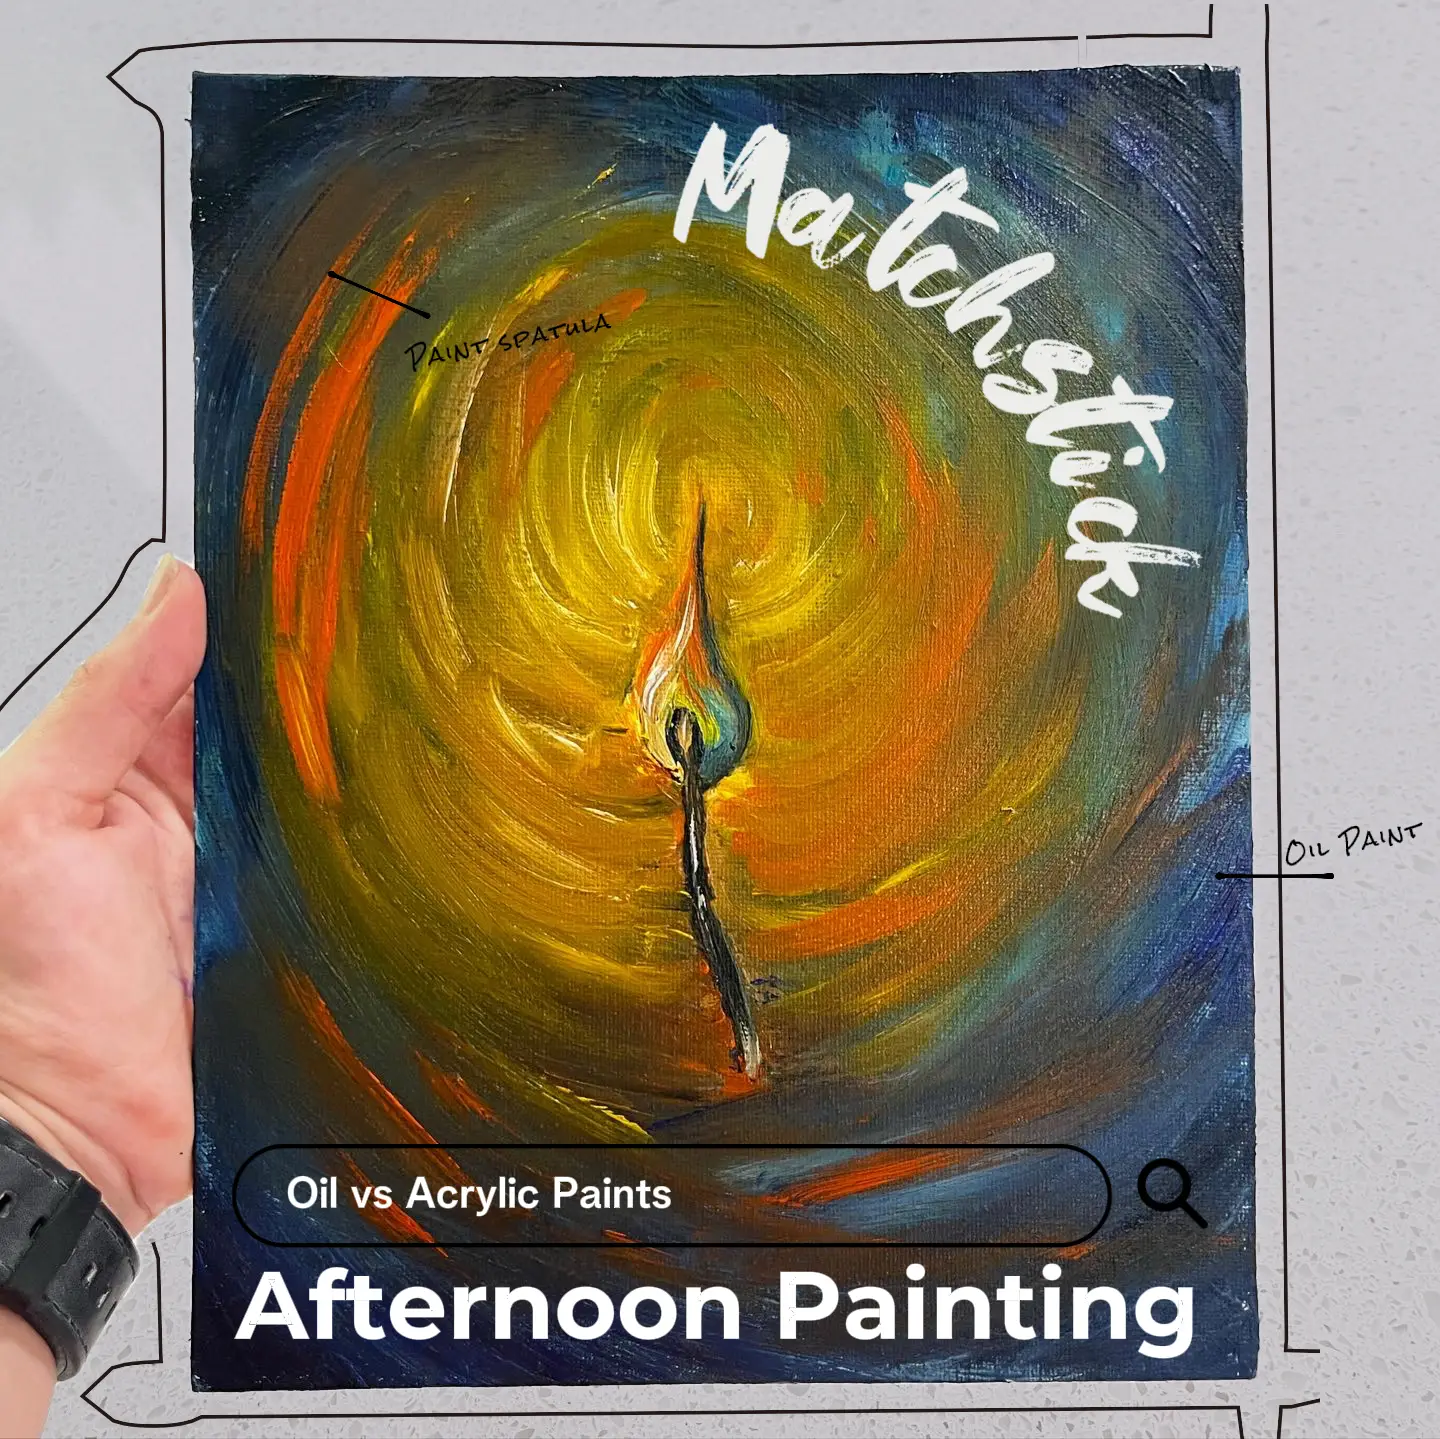 Oil Paint Sticks for Artists